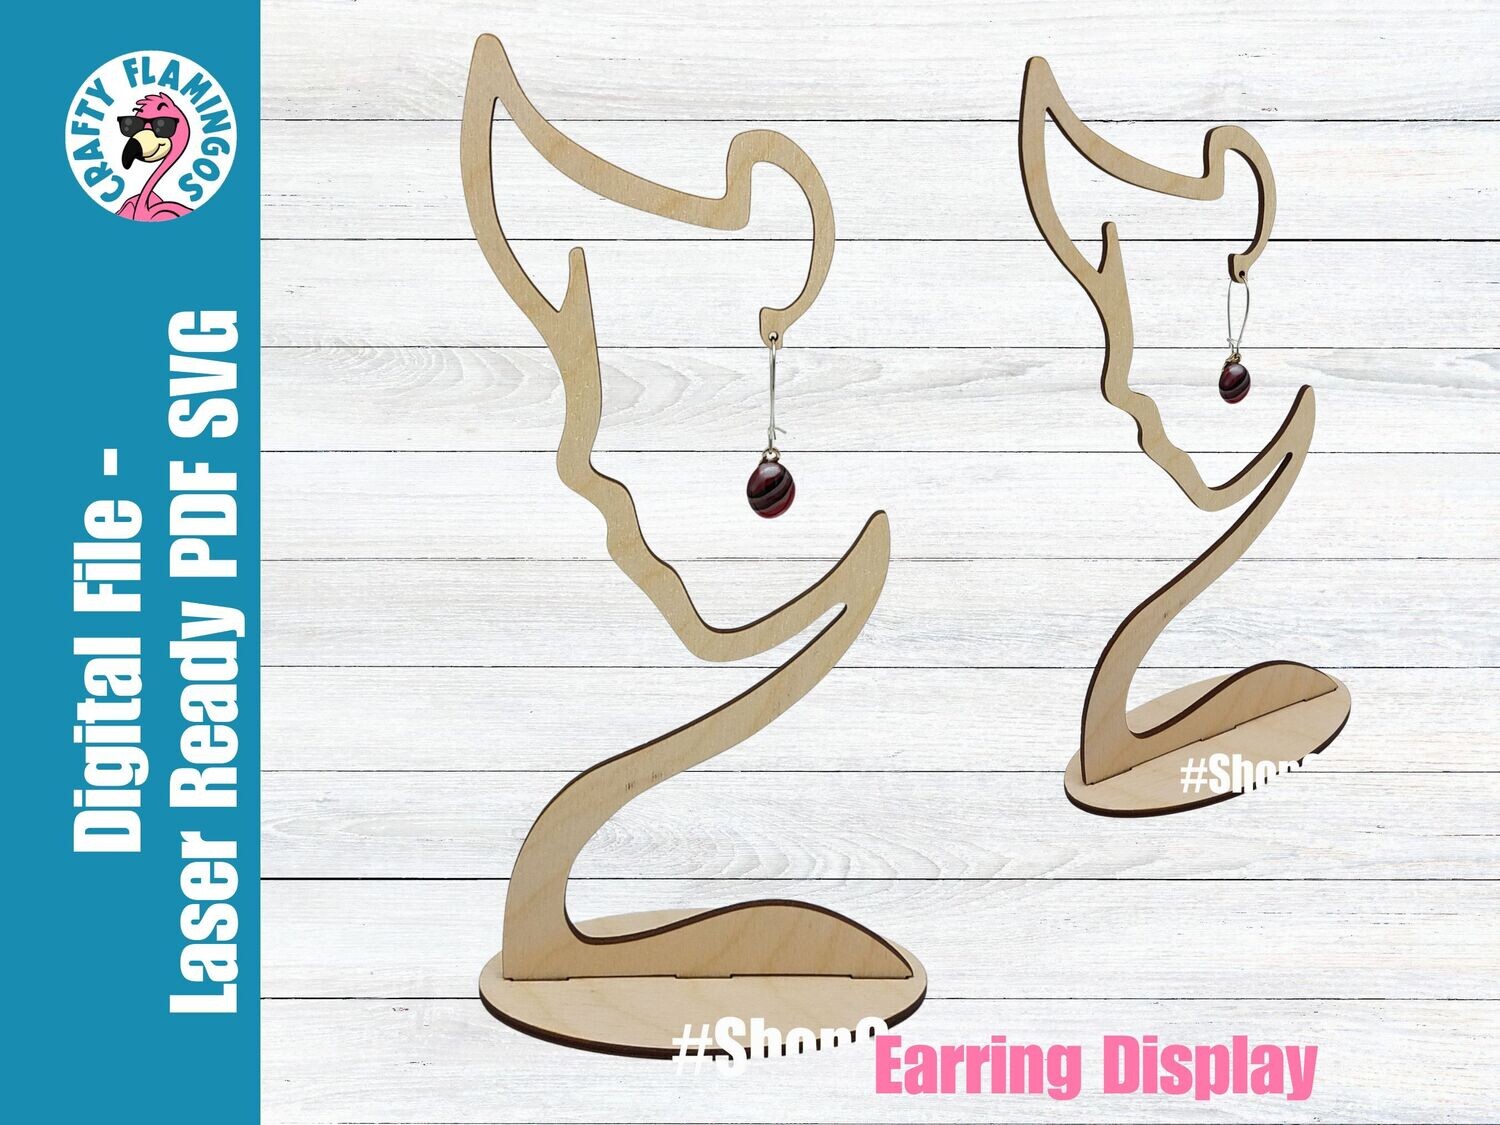 Earring Display Woman Silhouette SVG Glowforge Cut File Digital Download PDF